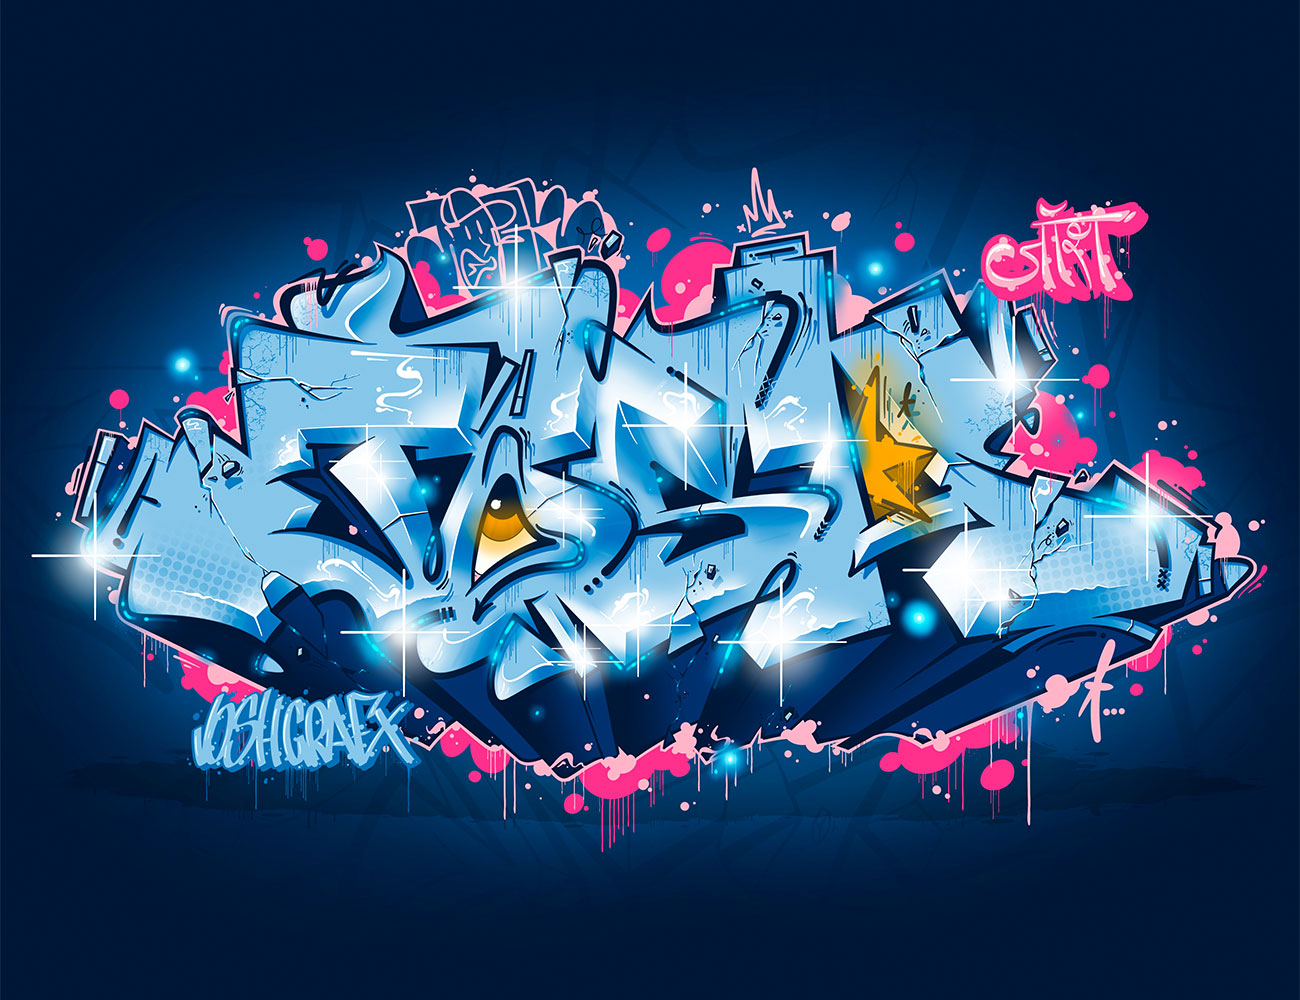 digital graffiti piece by Josh Grafx